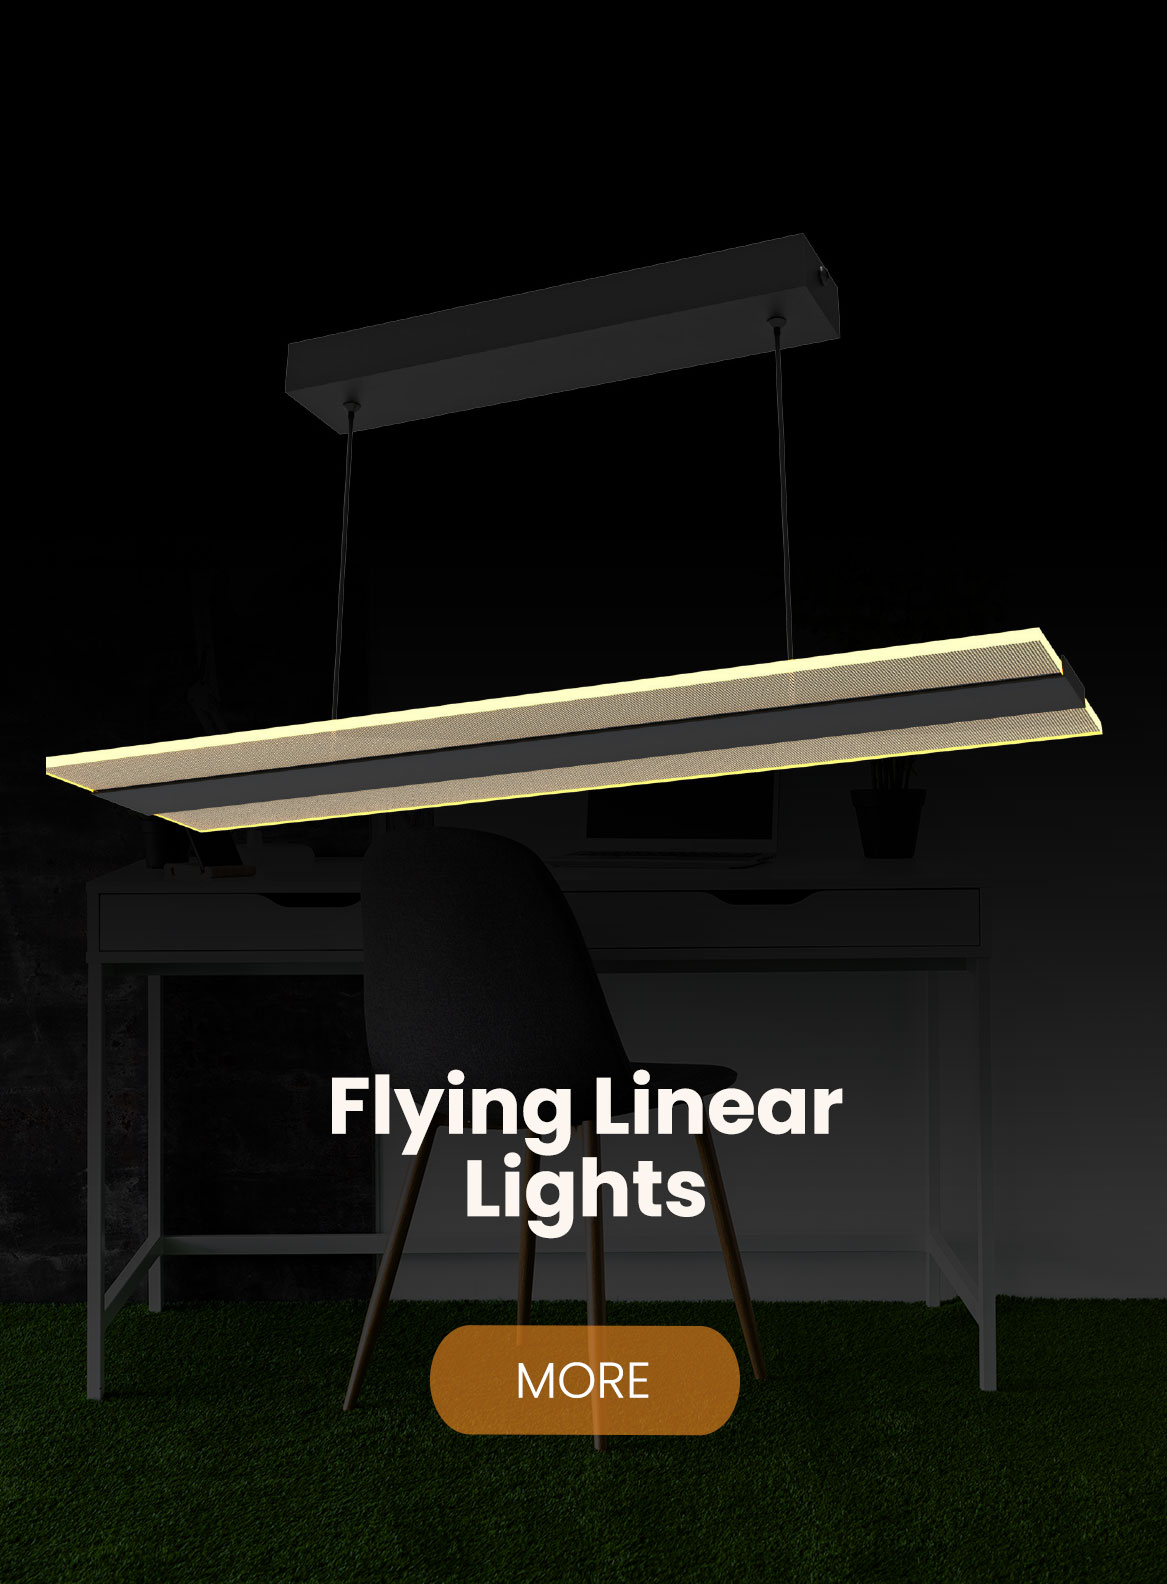 Flying Linear Lights